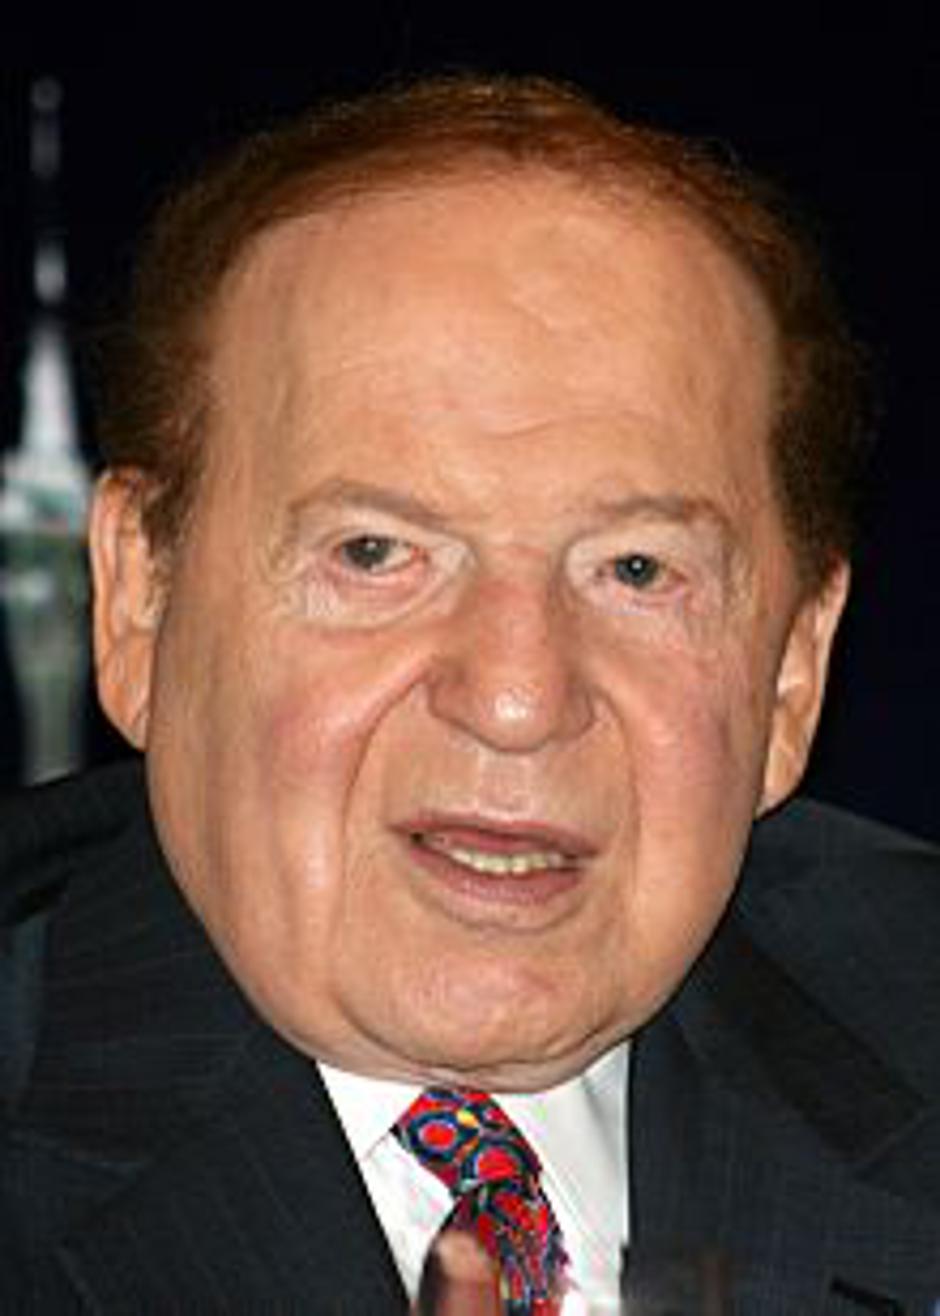 Sheldon Adelson | Author: Wikipedia